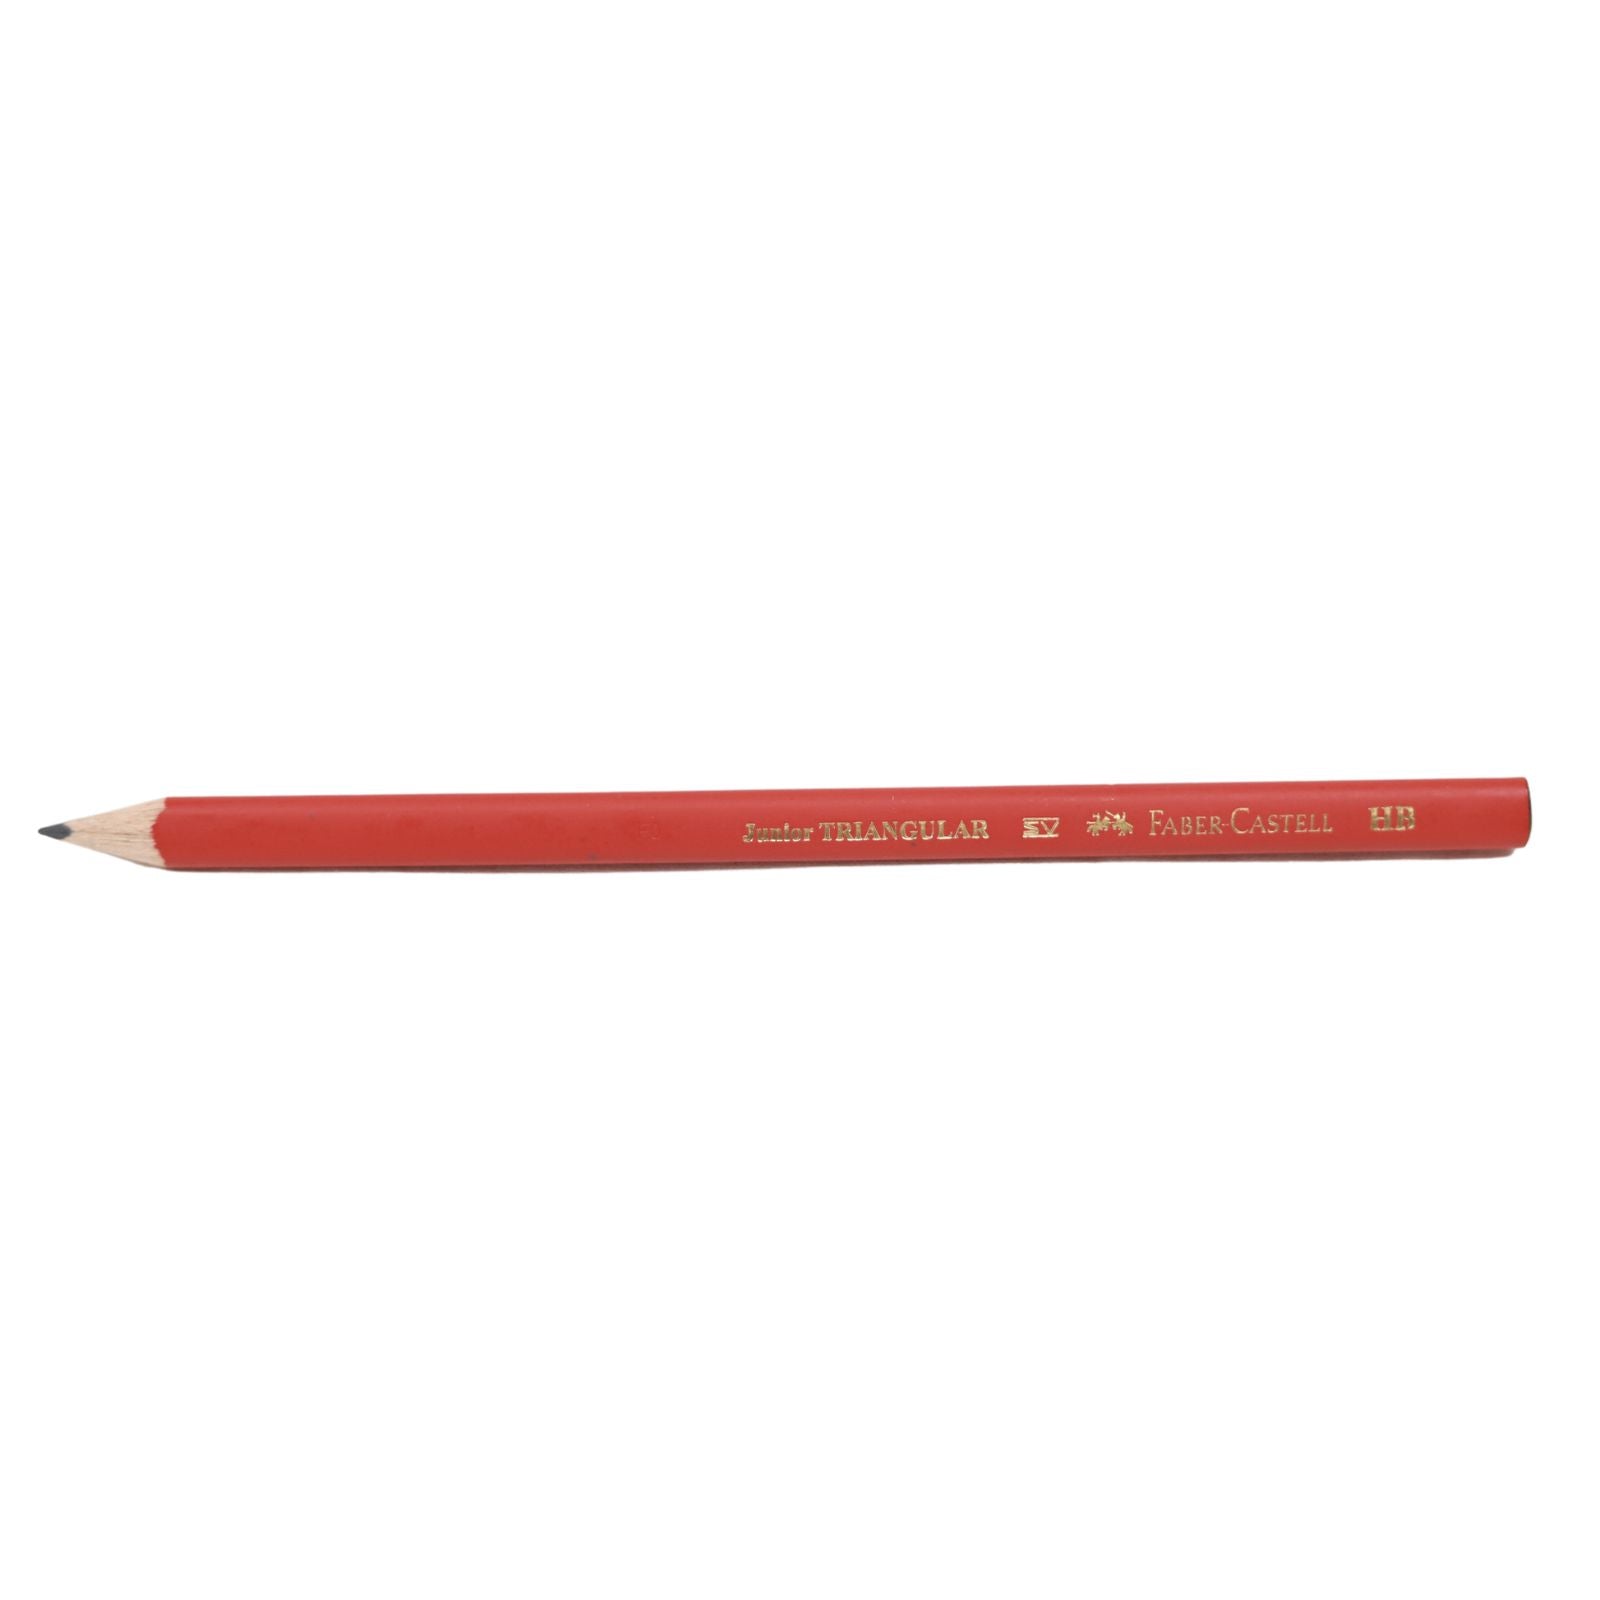 Graphite pencil STABILO pencil 160 - pack of 3, HB + eraser